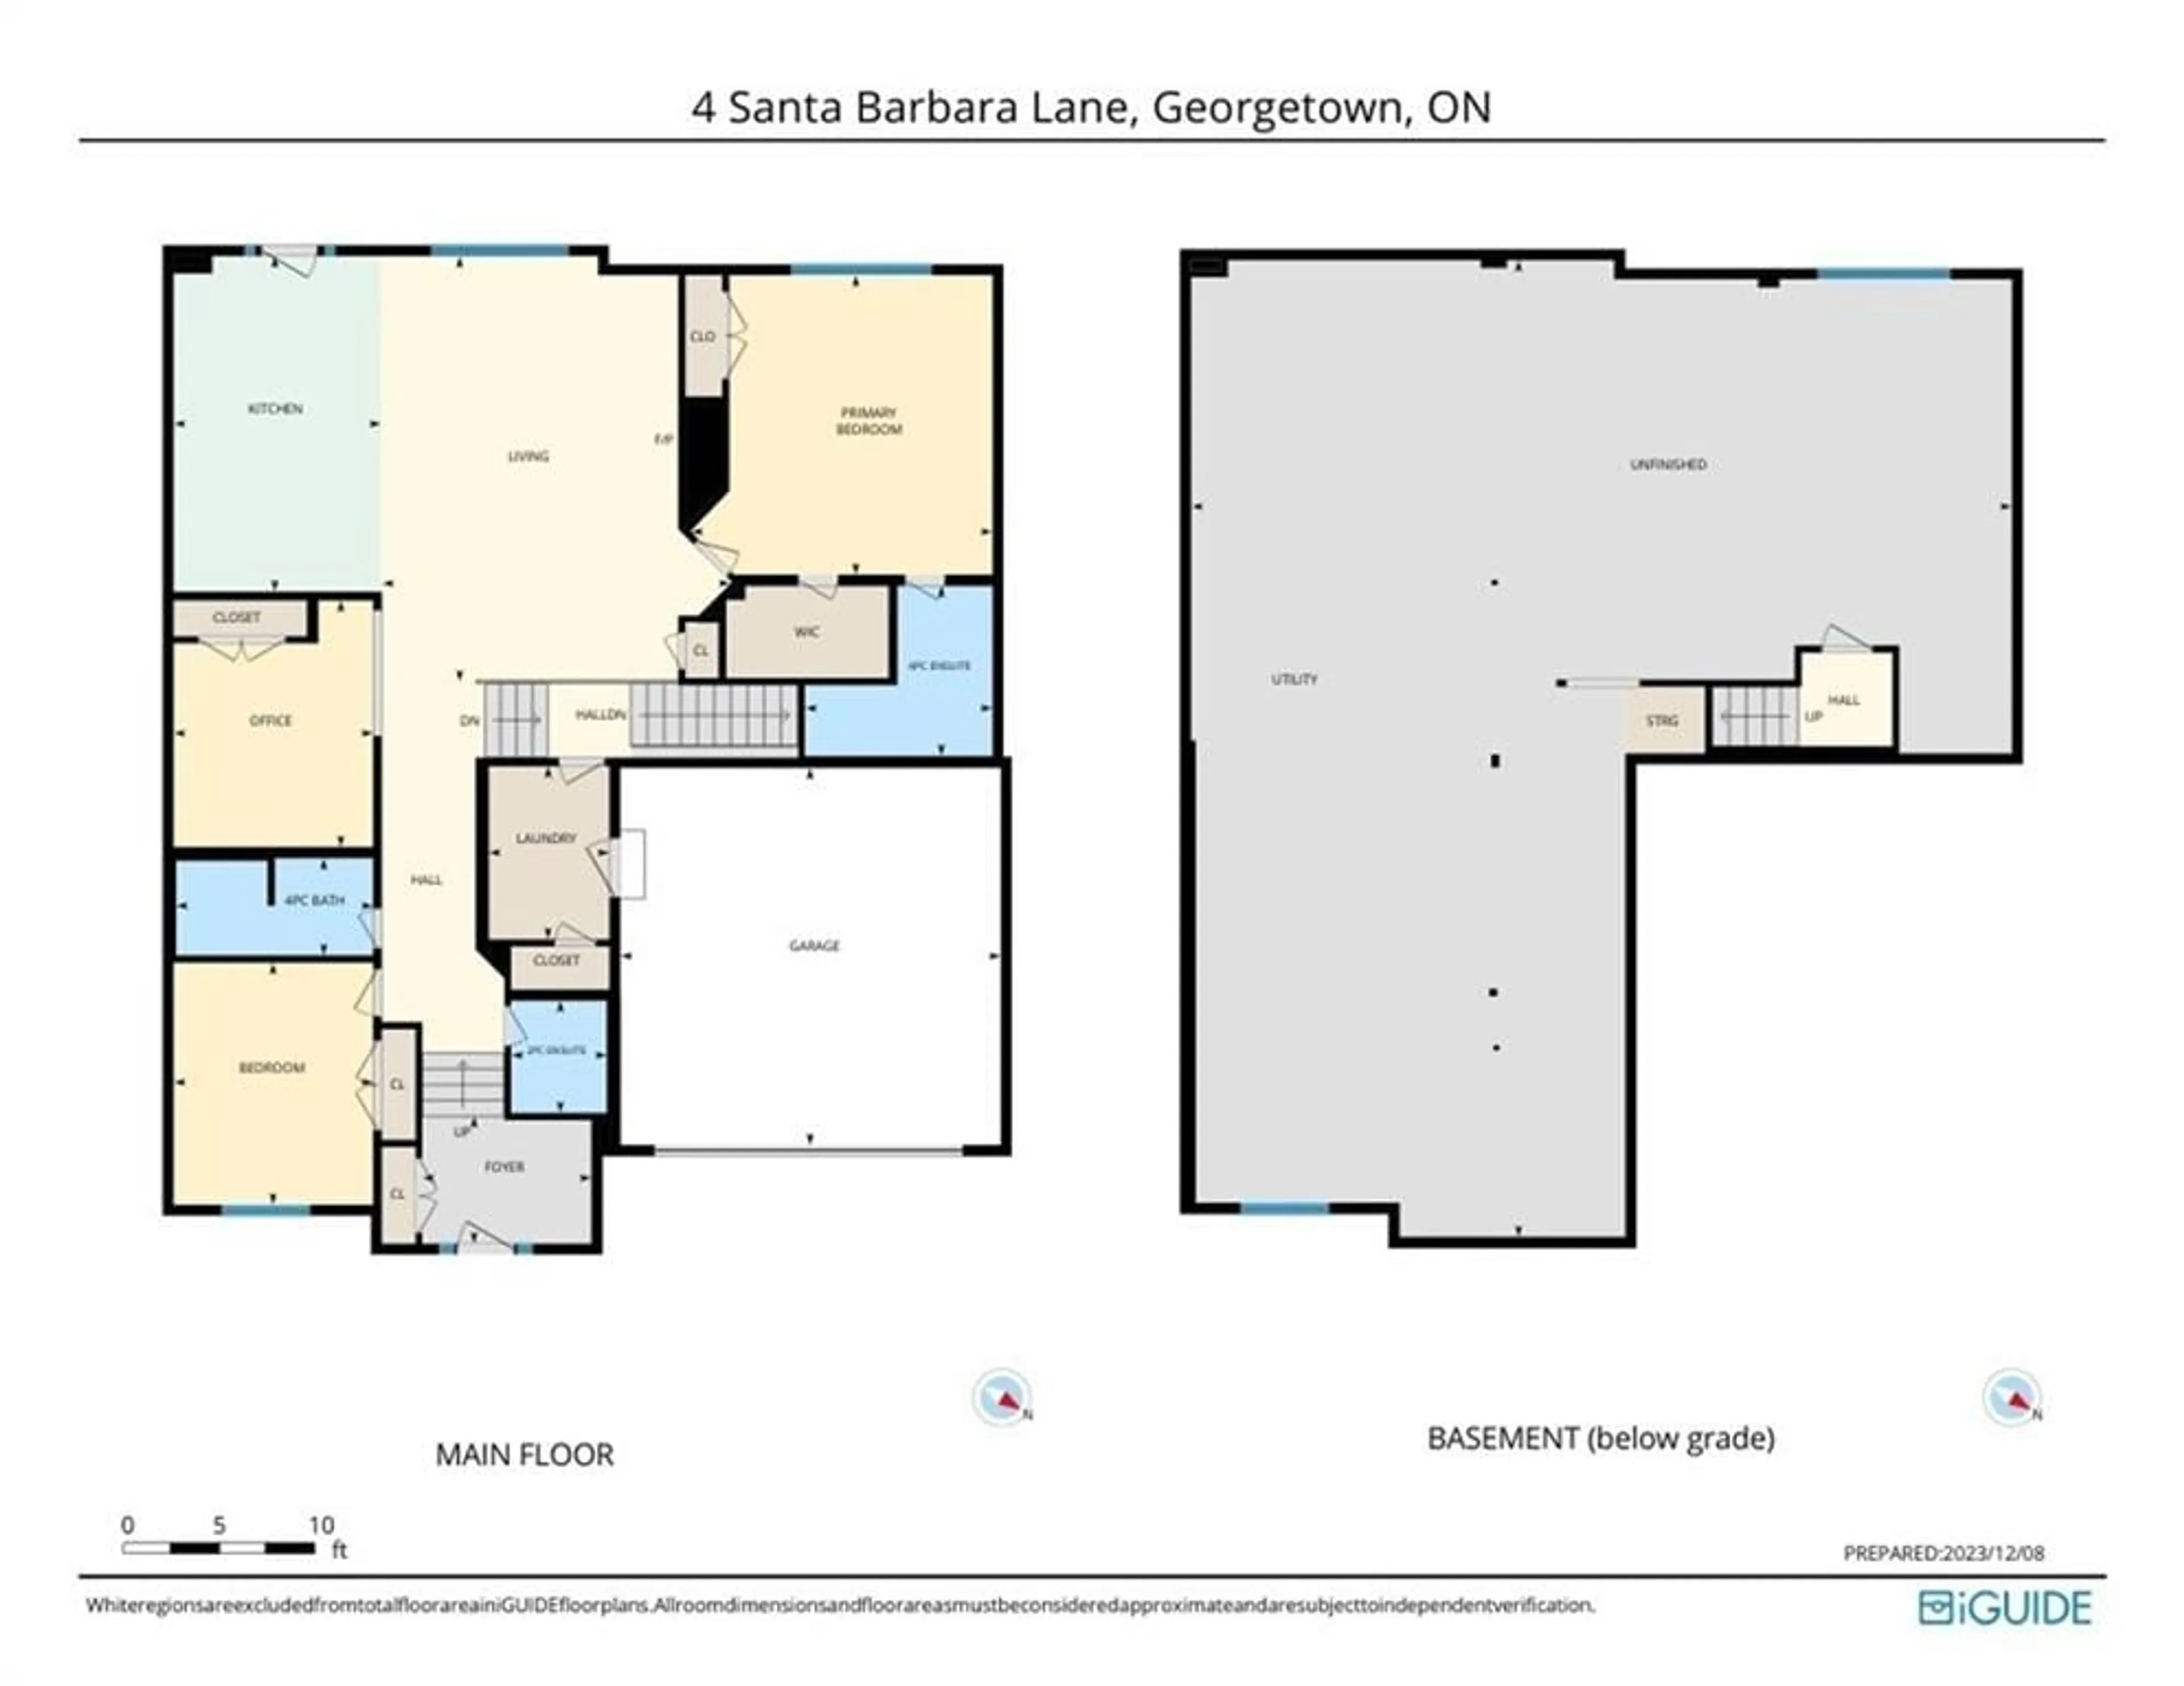 Floor plan for 4 Santa Barbara Lane, Georgetown Ontario L7G 0P7